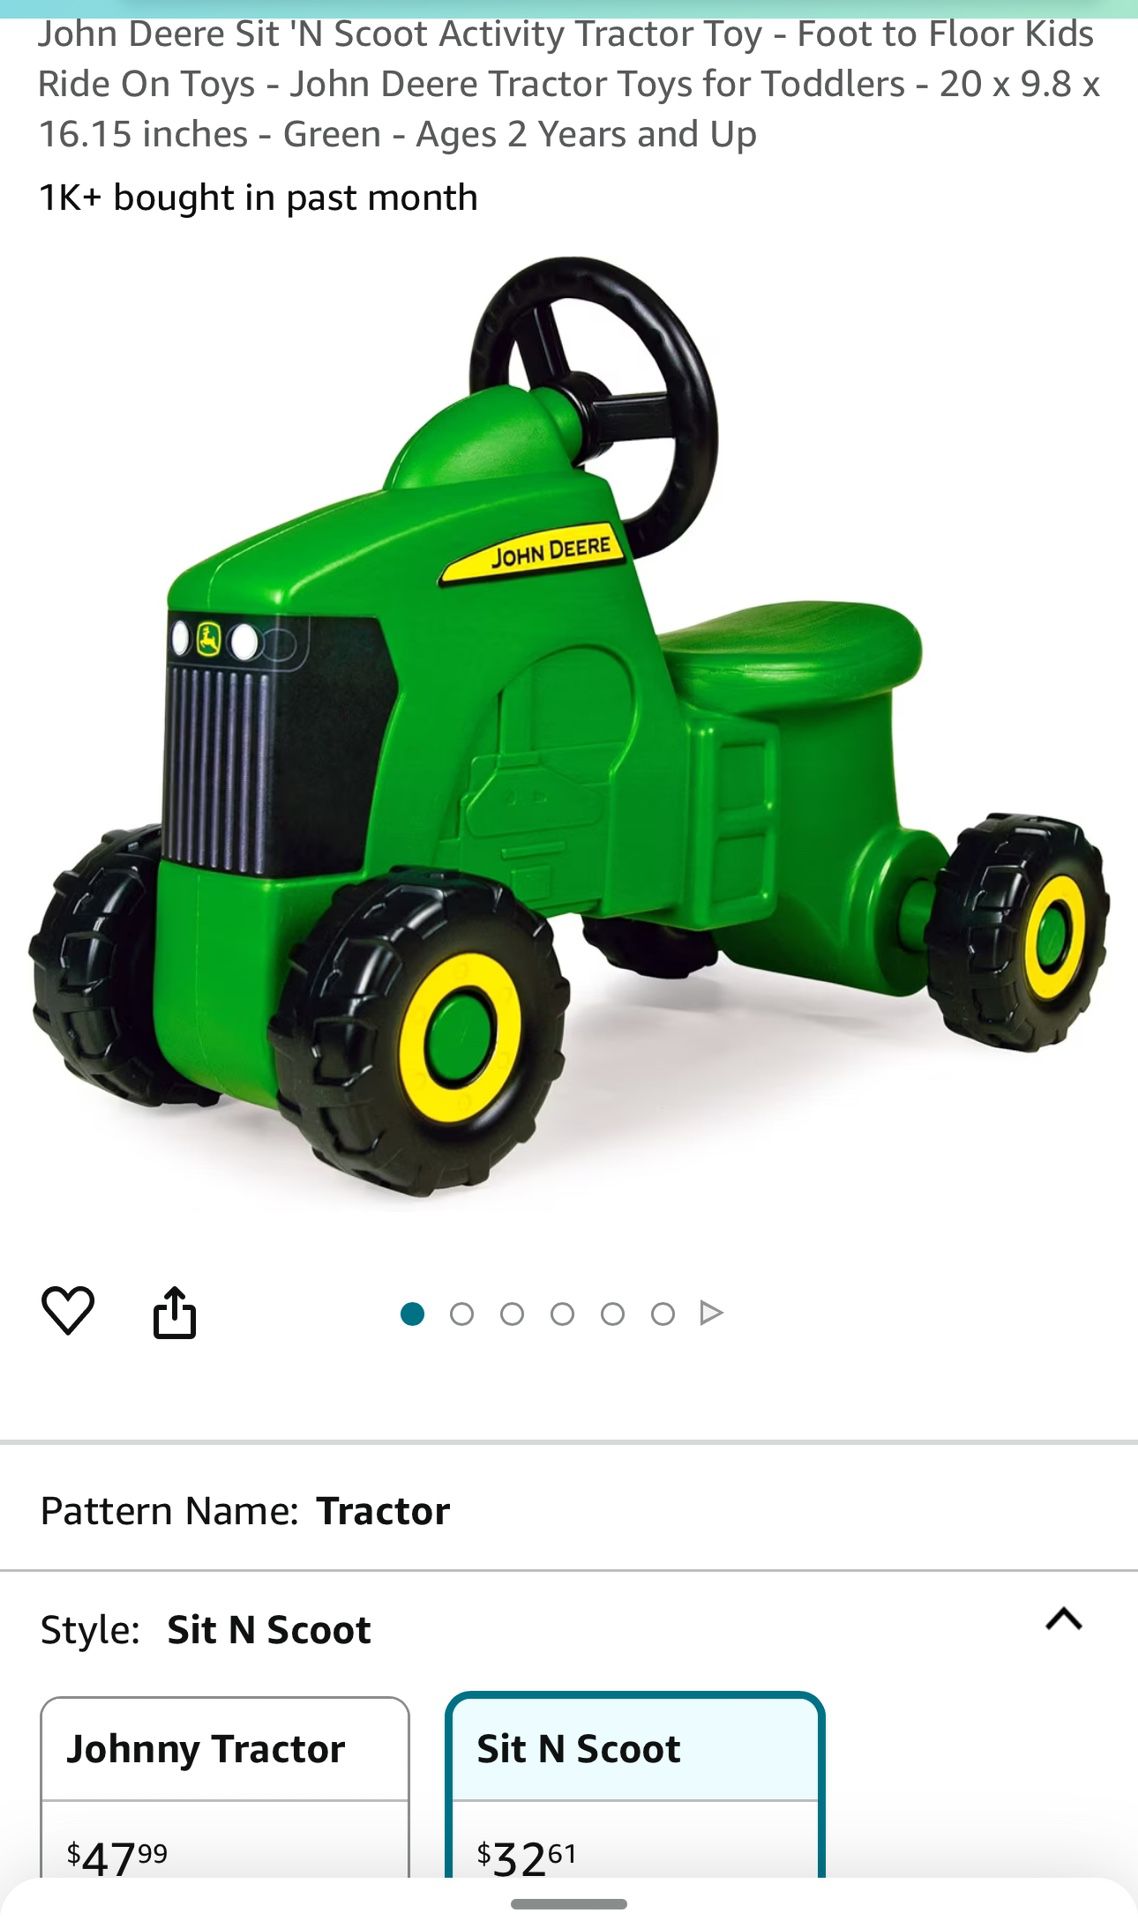 John Deere Sit N Scoot Tractor Toy